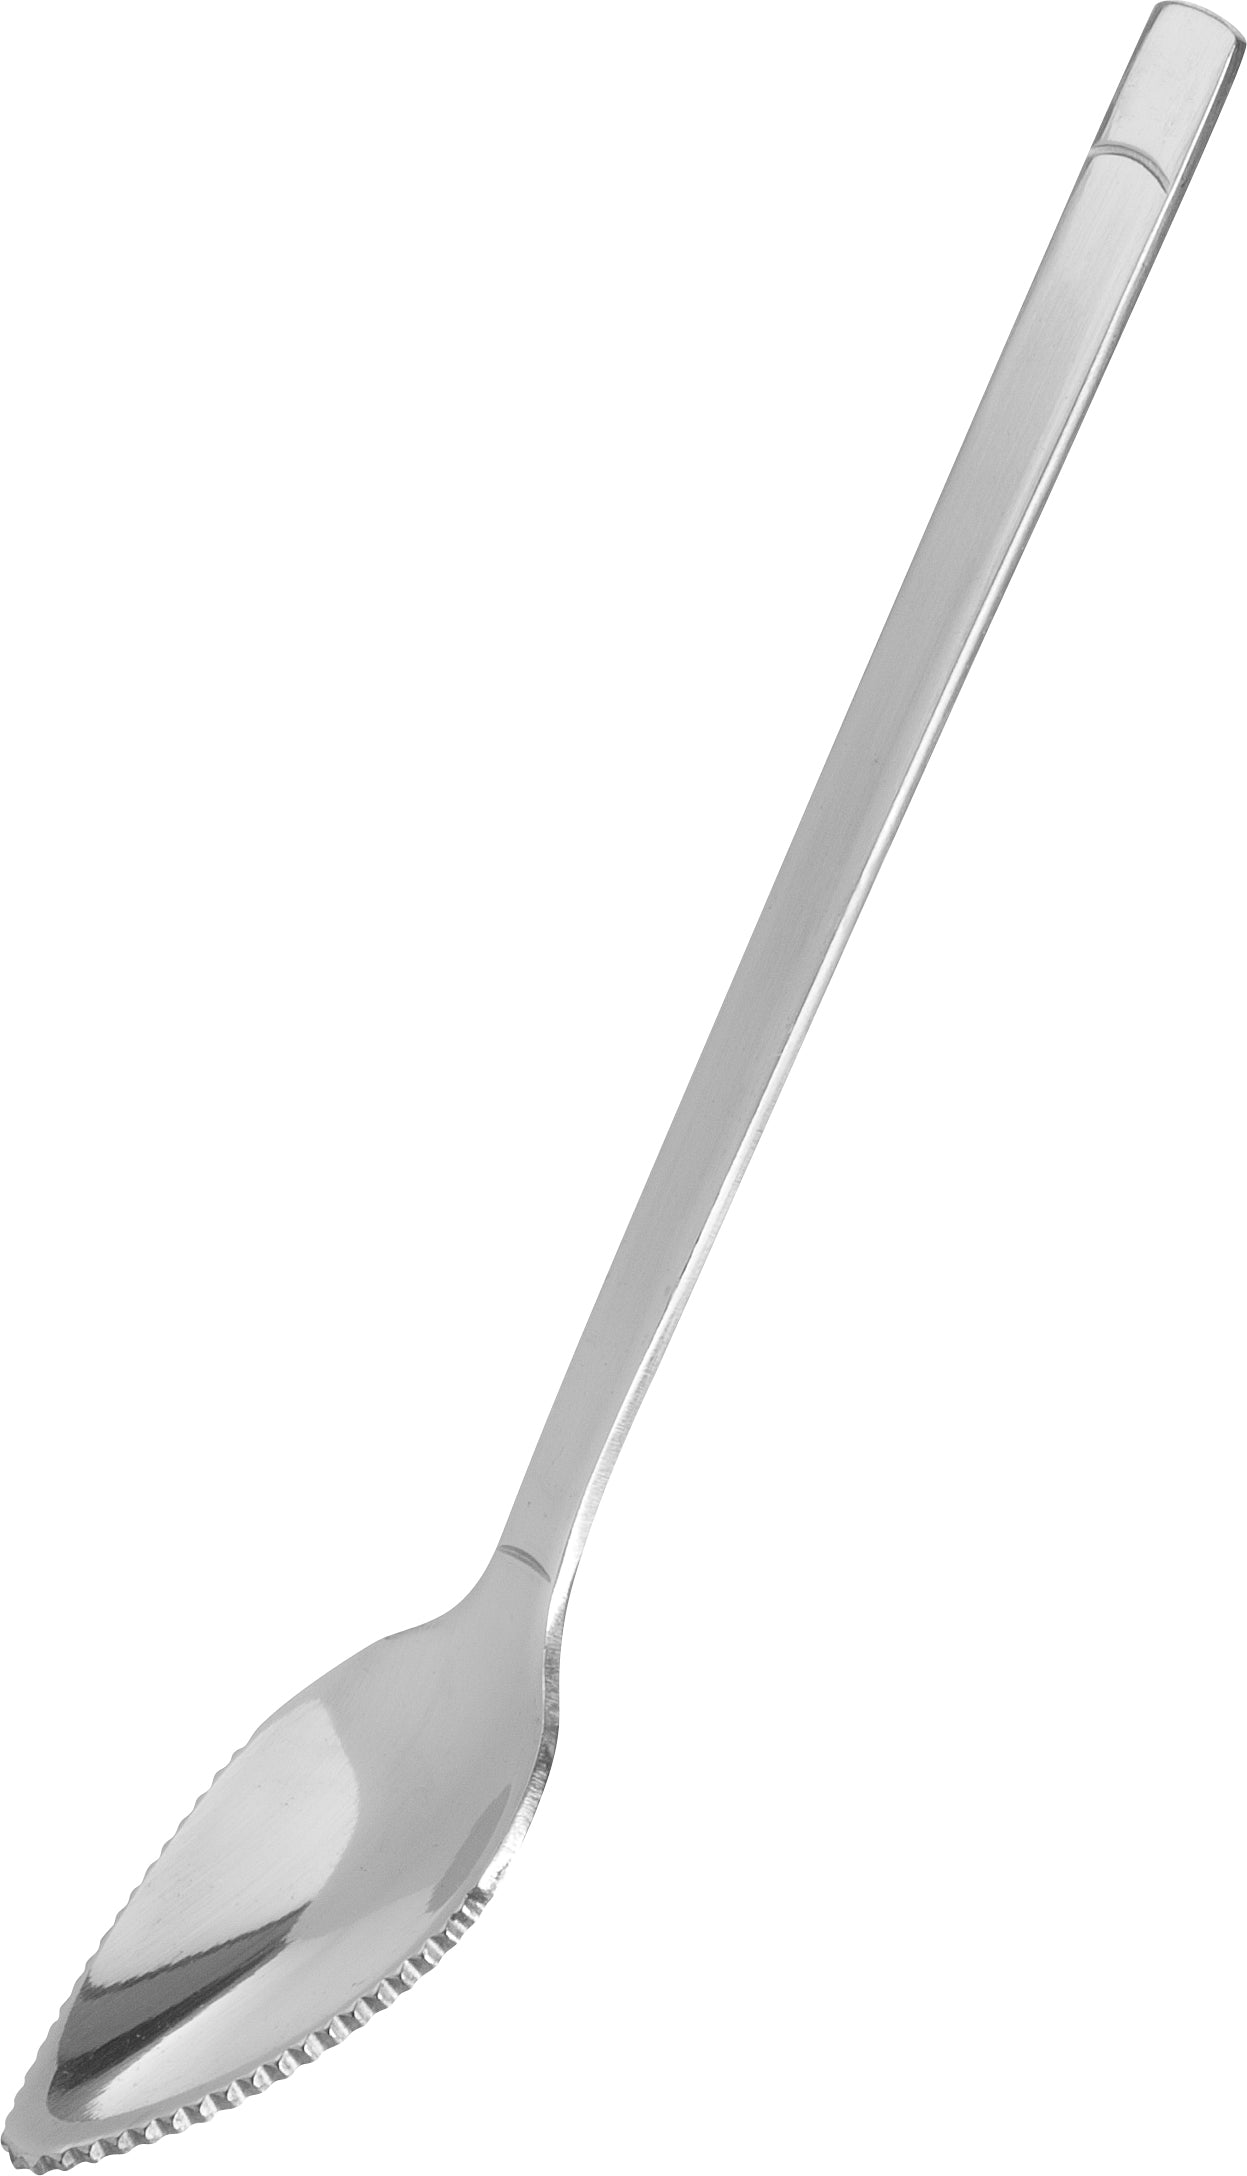 Stainless steel Grapefruit spoon